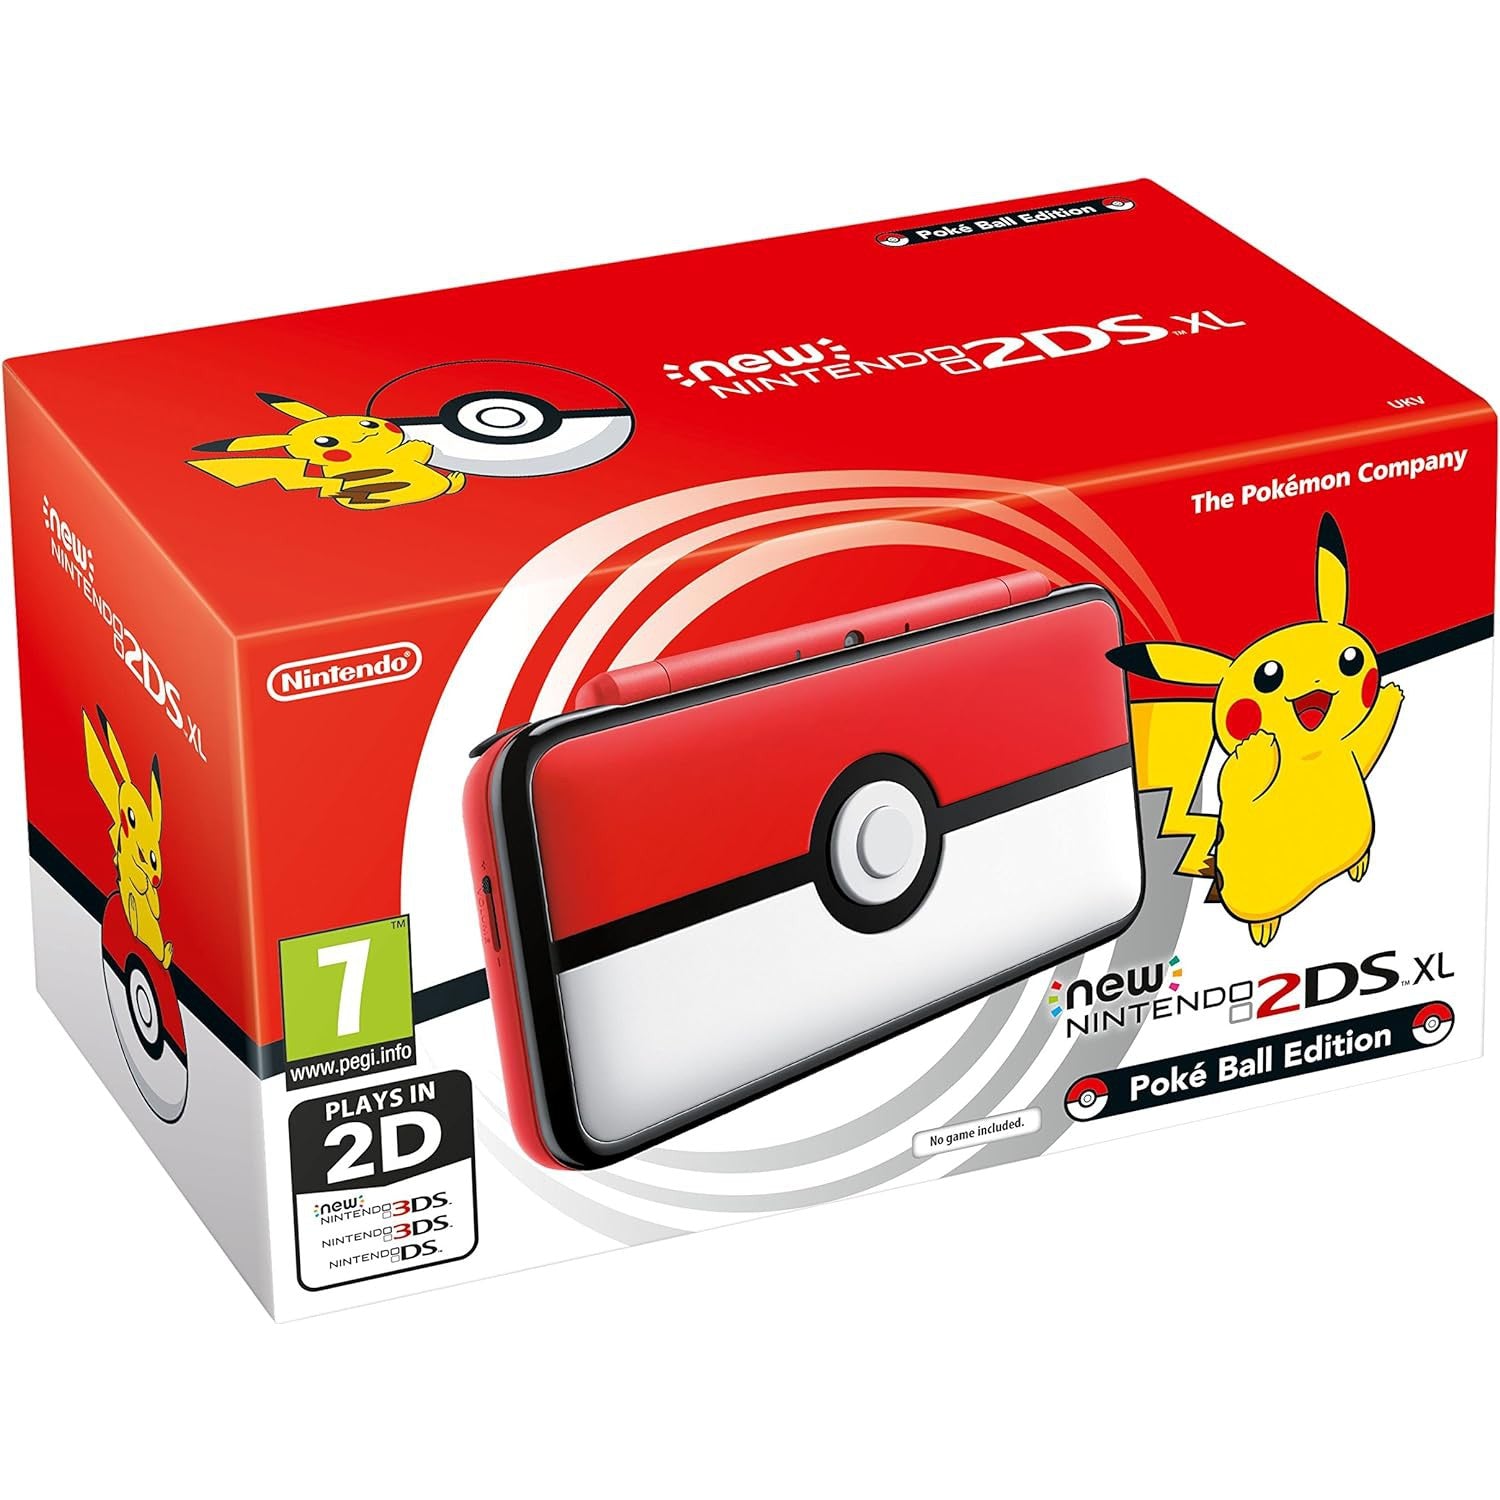 Nintendo 2DS XL Poke Ball Edition